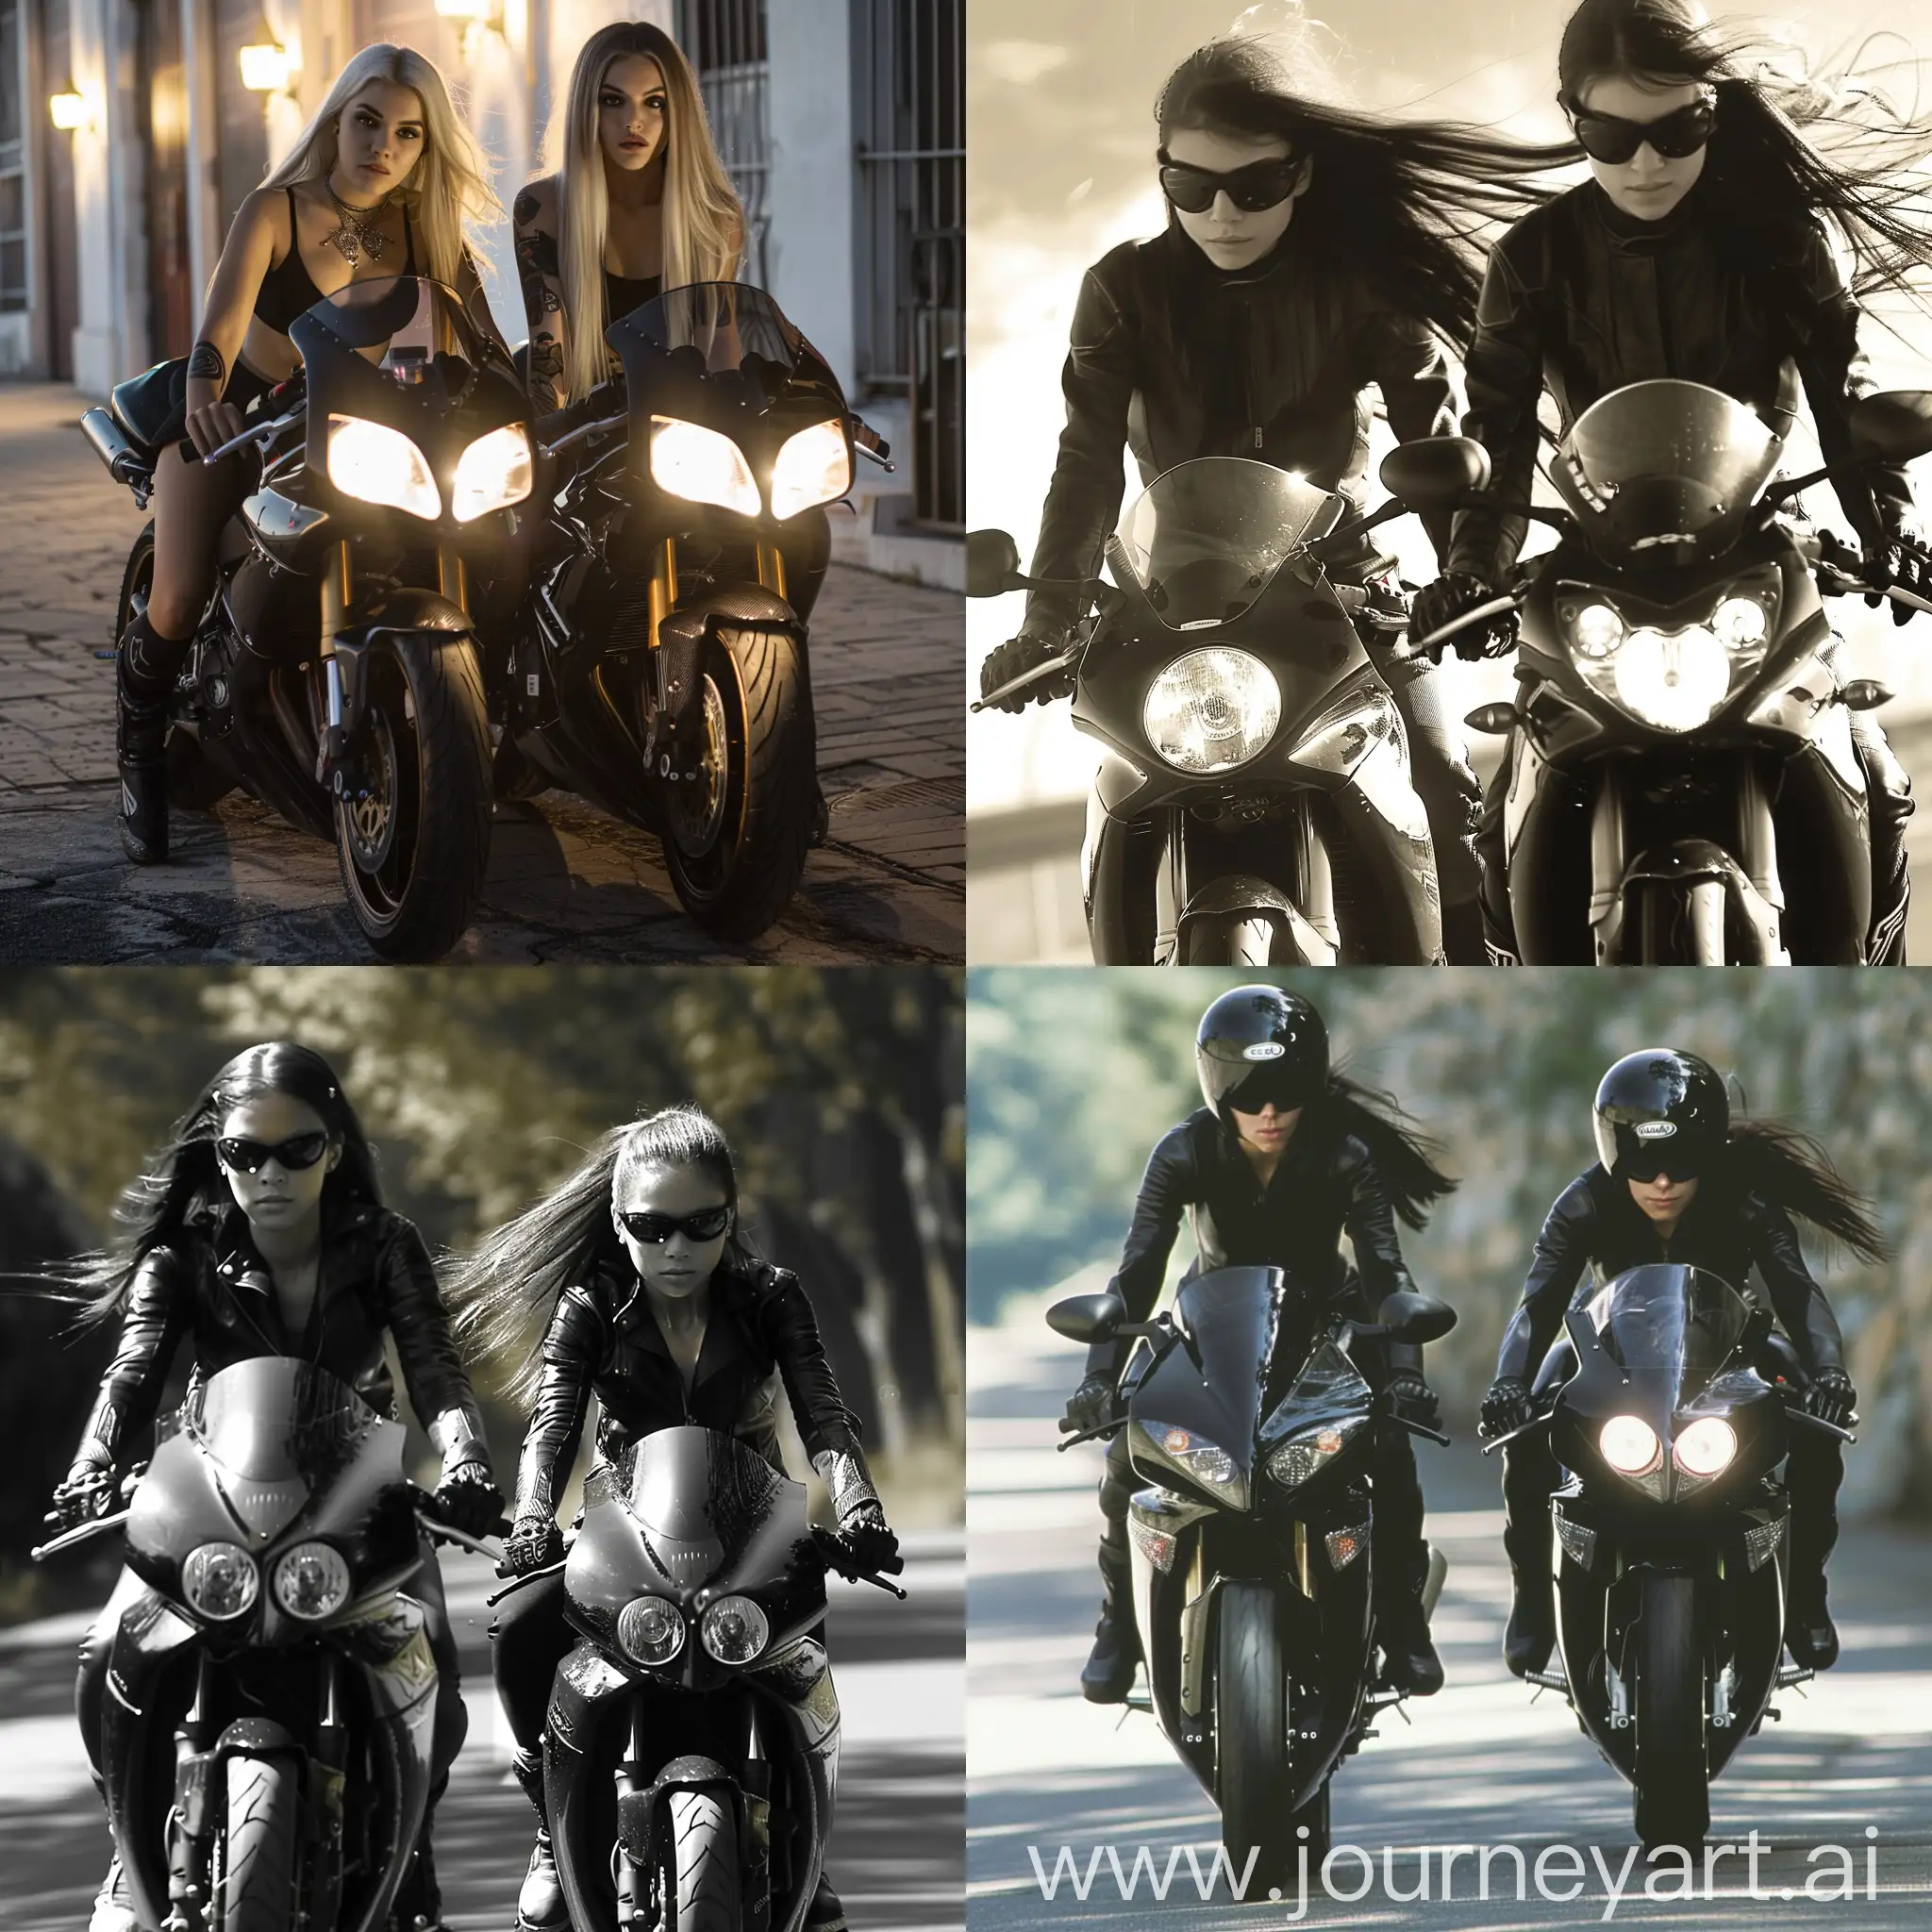 MatrixInspired-Duo-Riding-Sports-Motorcycles